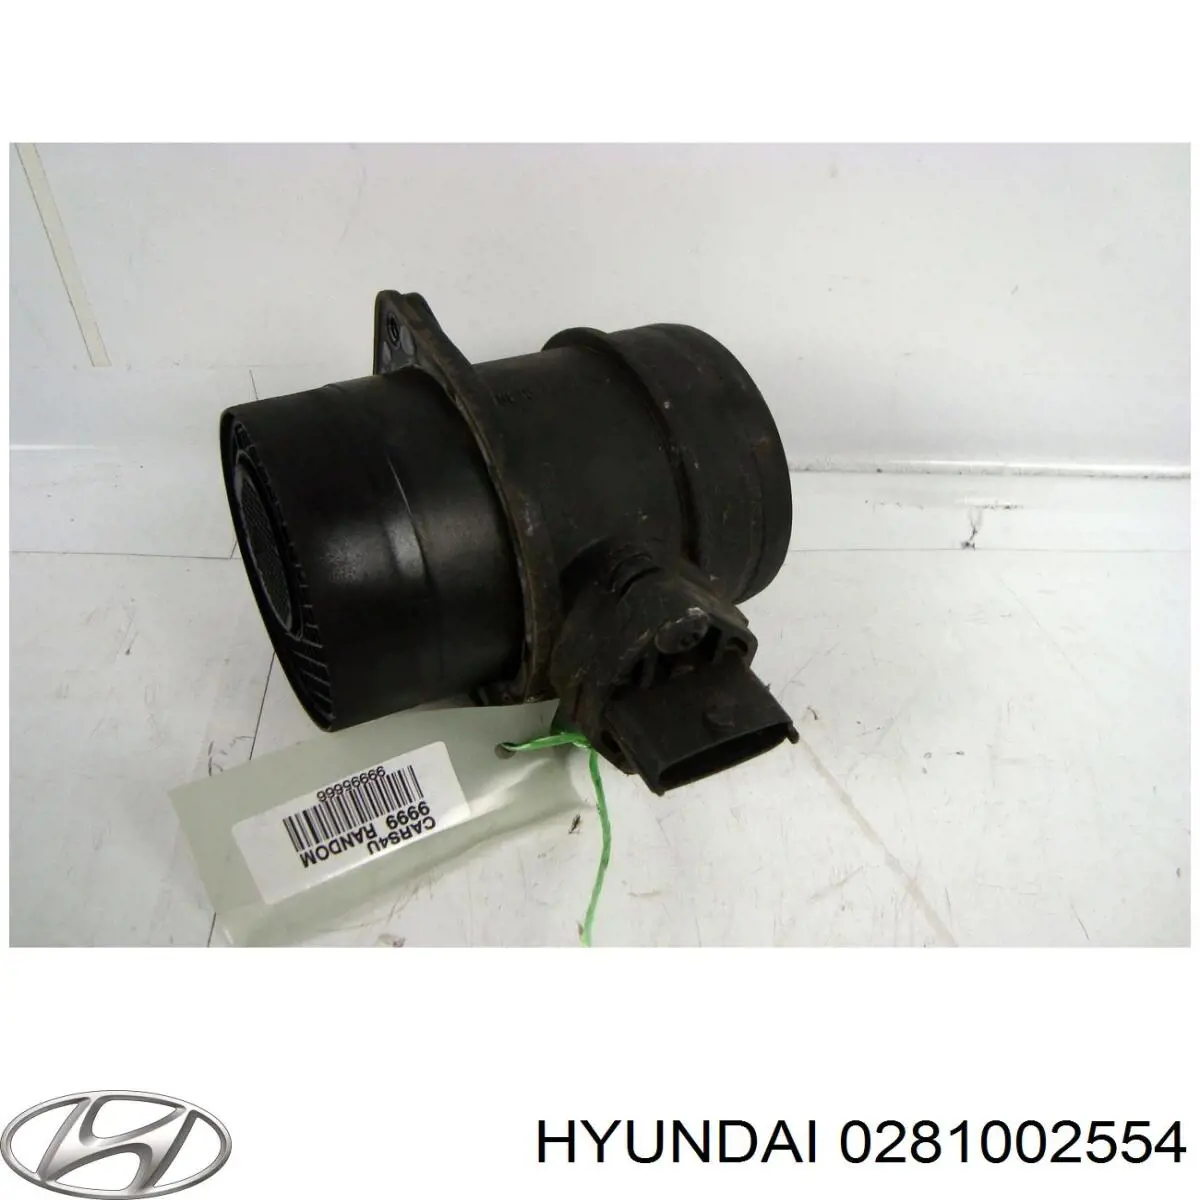 0281002554 Hyundai/Kia sensor de fluxo (consumo de ar, medidor de consumo M.A.F. - (Mass Airflow))